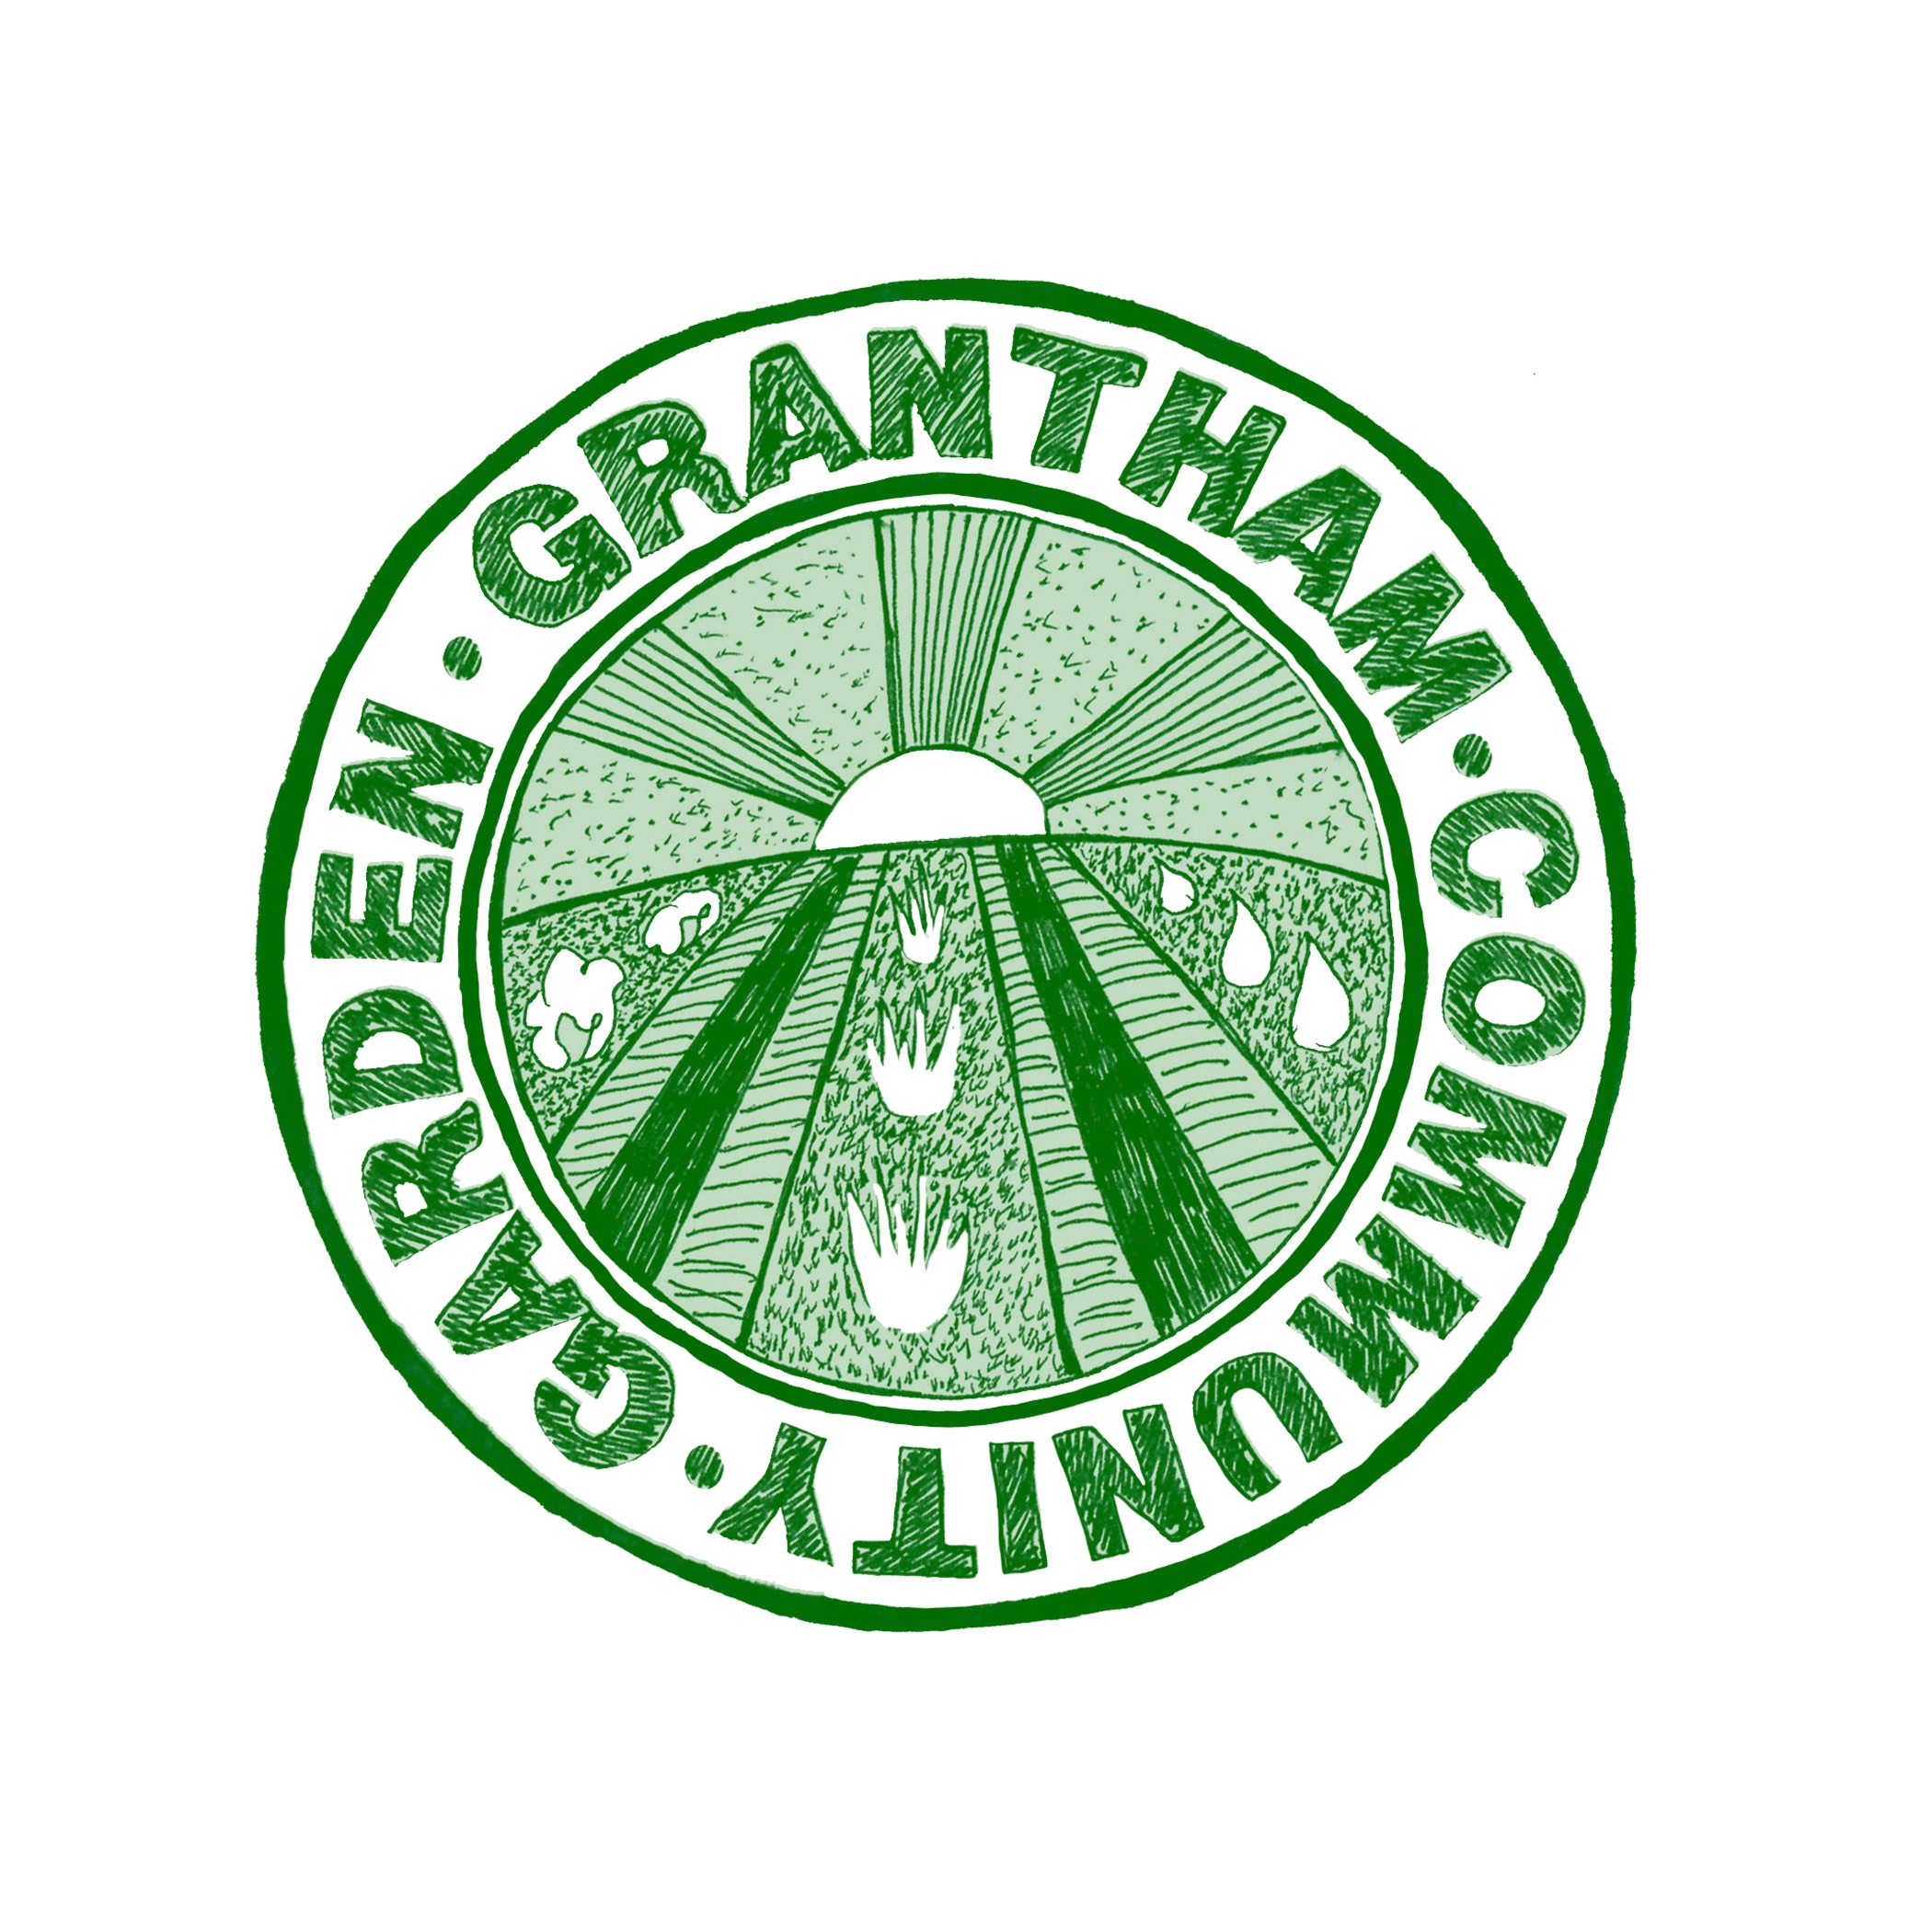 Grantham Community Garden logo